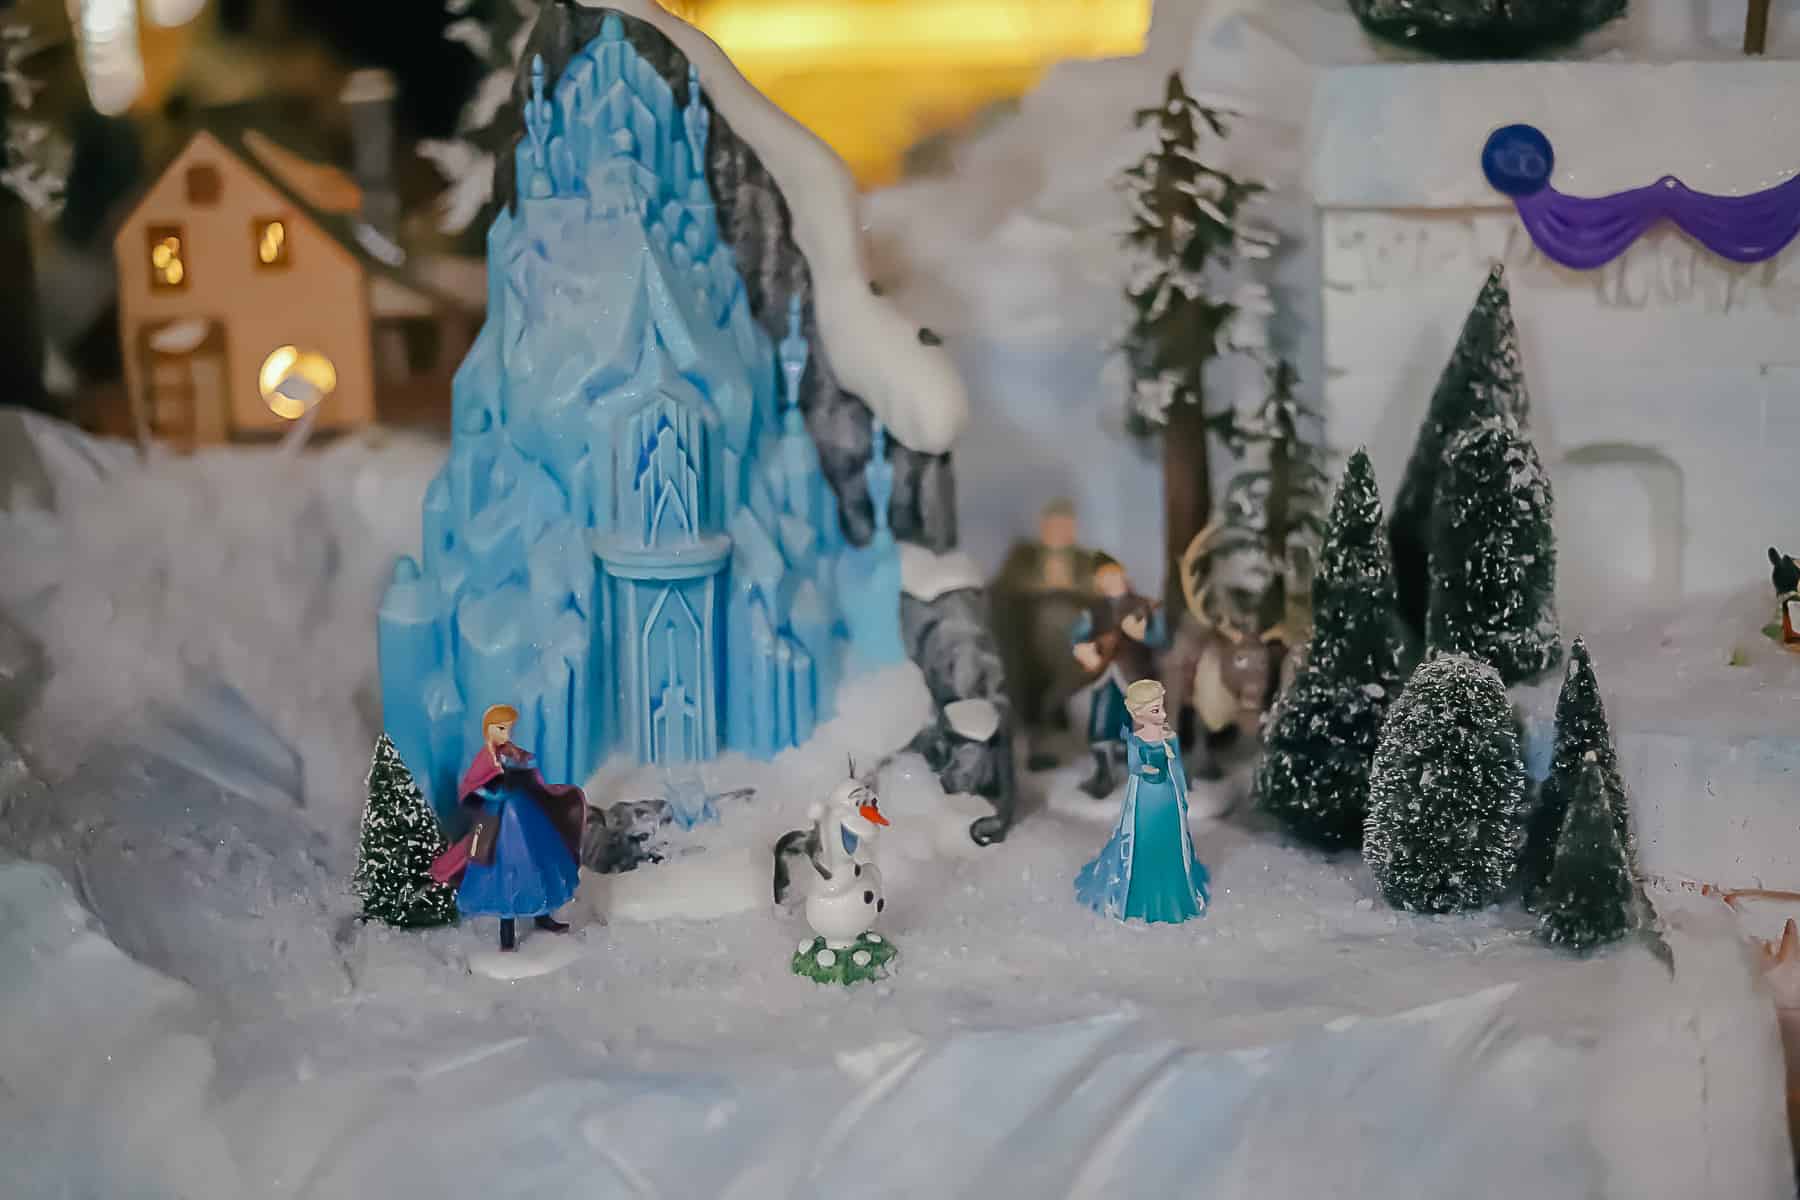 Figurines of Anna, Elsa, and Olaf